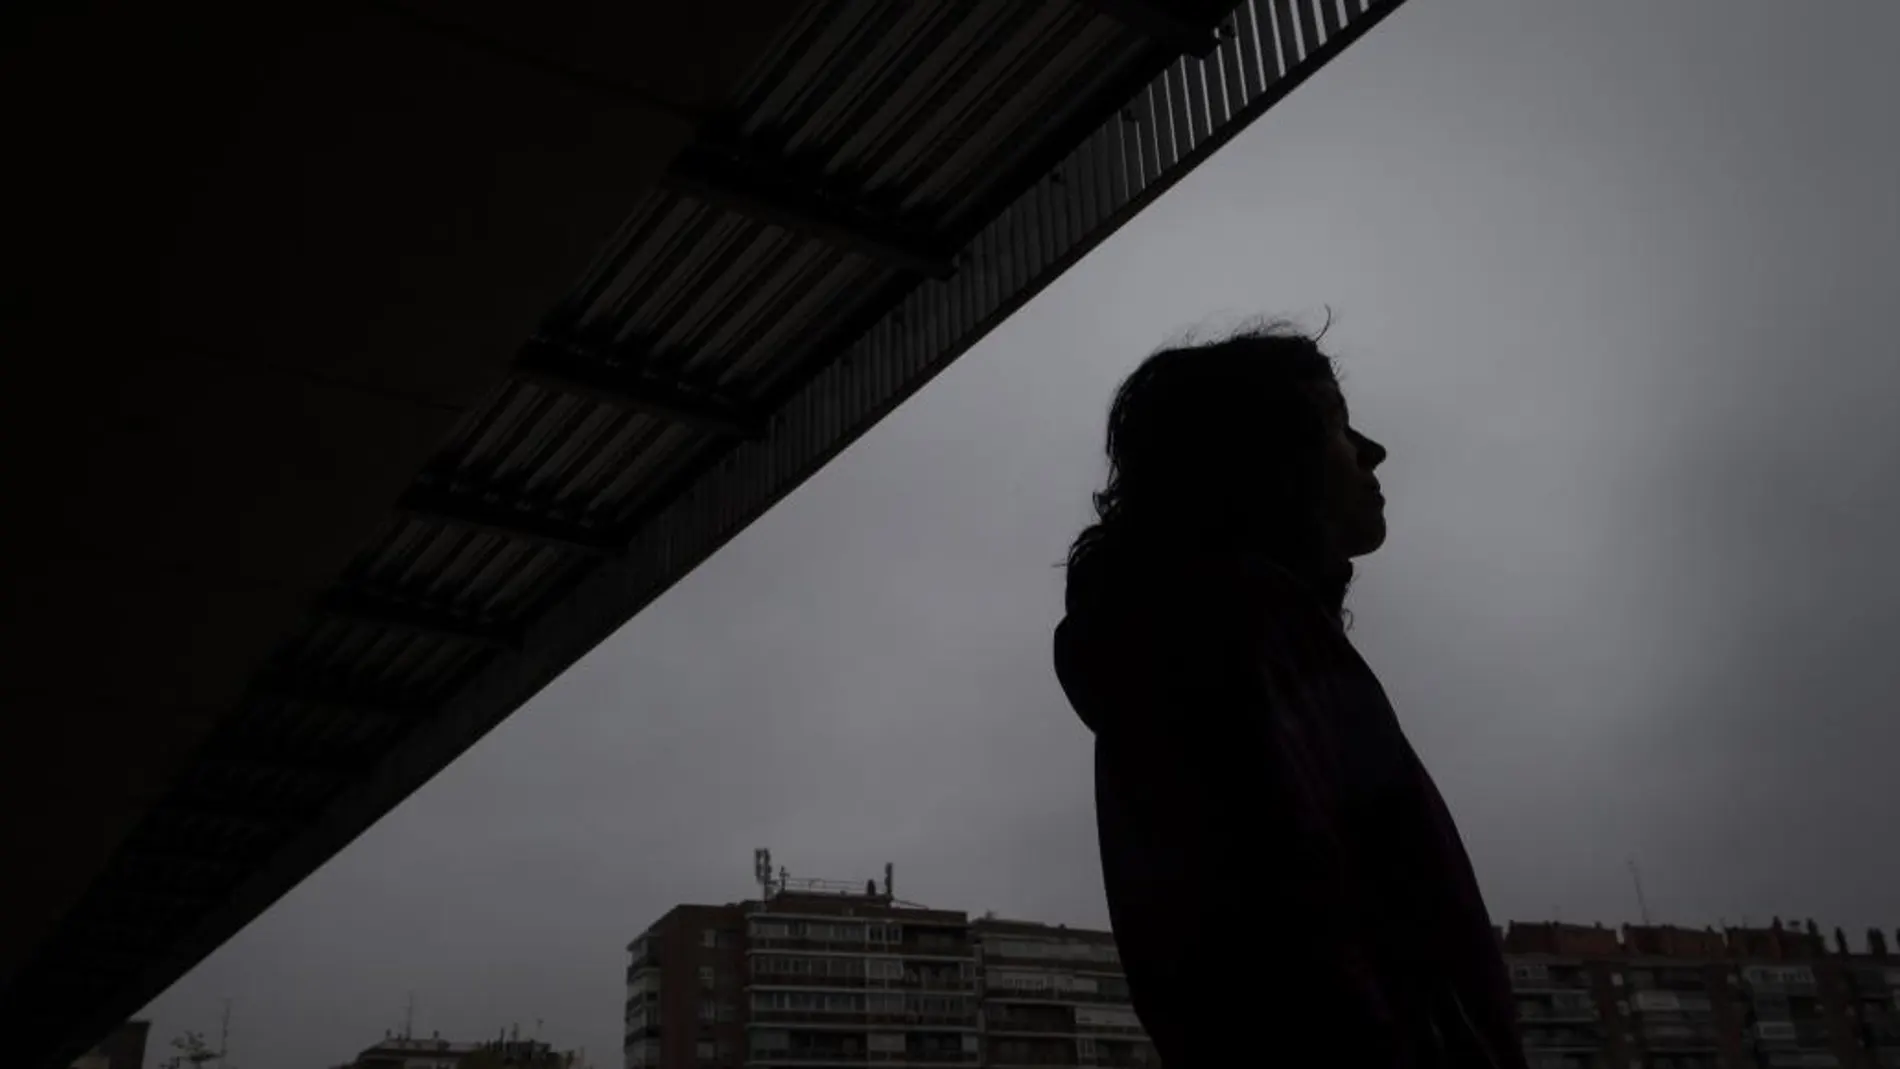 Seis de cada 10 universitarios españoles han sufrido o conocen casos de acoso